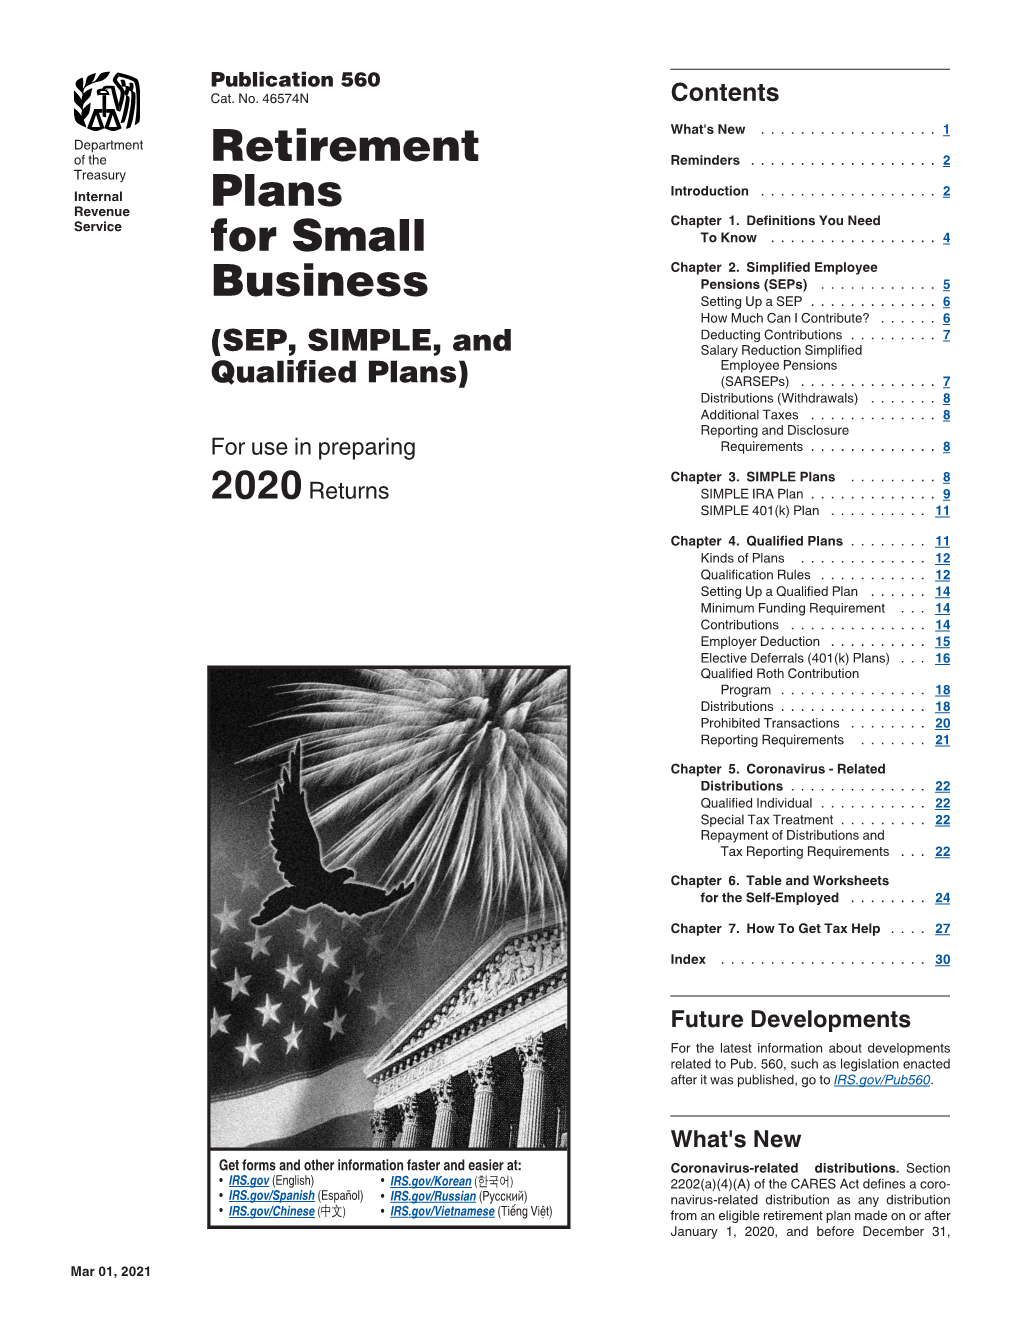 Publication 560, Retirement Plans for Small Business